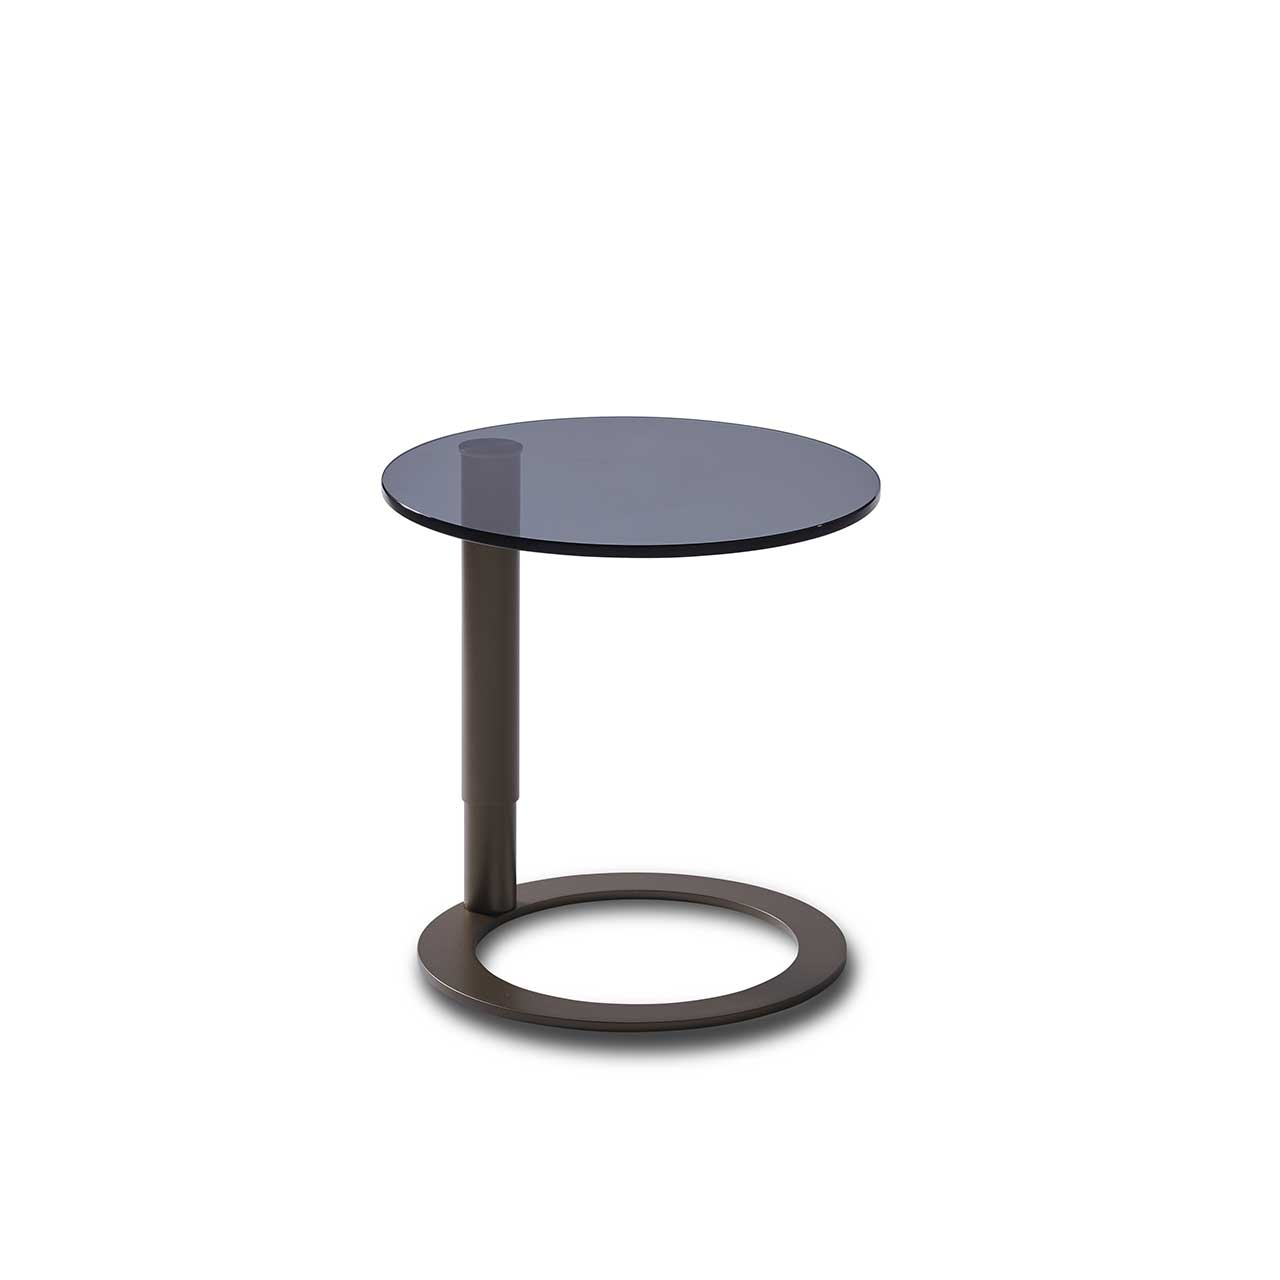 Ronald Schmitt – Beistelltisch Rondo K 441 – unten | Tischplatte Parsolglas grau, Metallgestell bronze